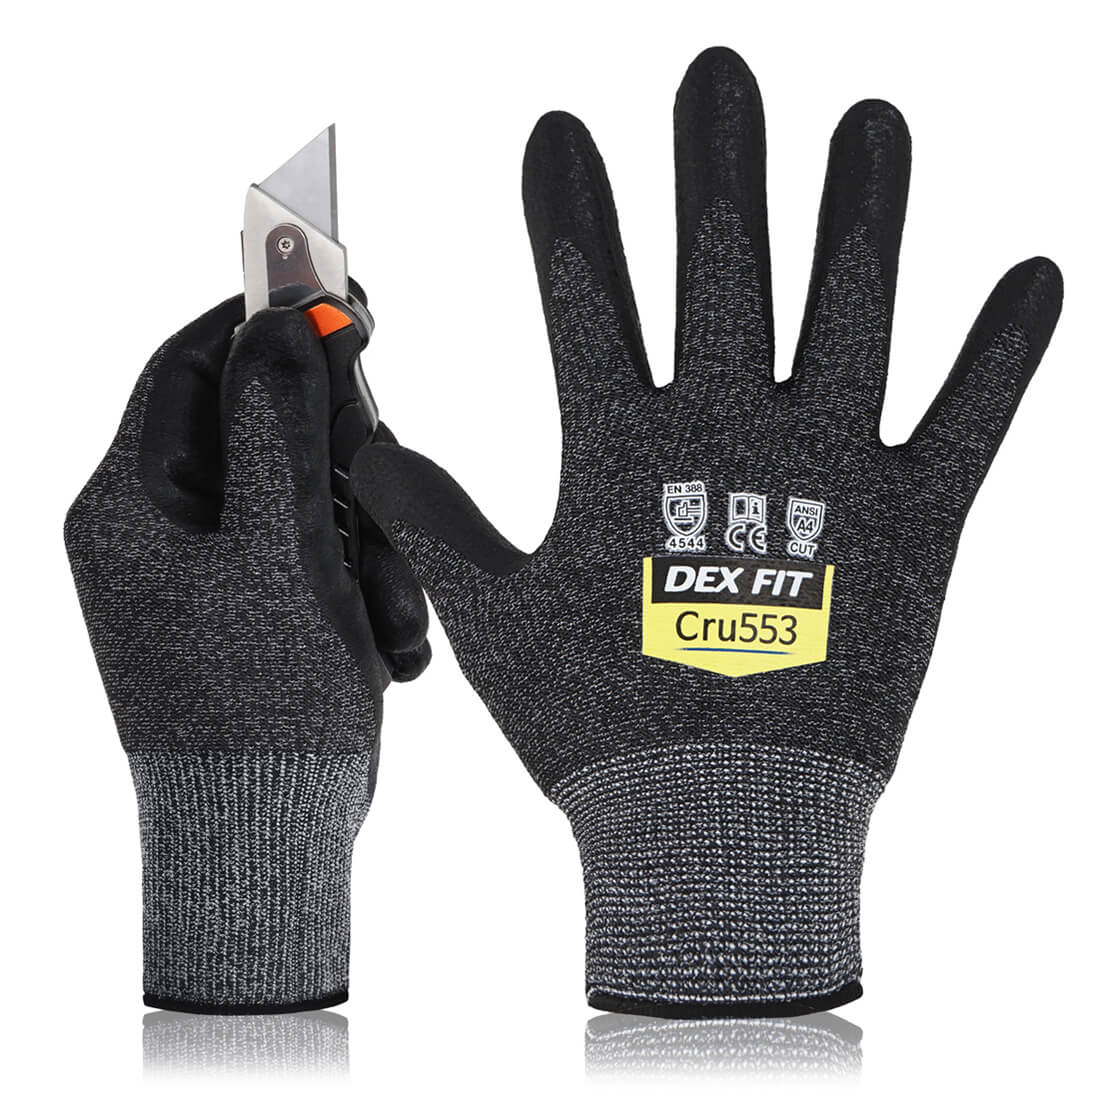 MUVEEN Level 5 Cut Resistant Gloves [DEX Fit] (Cru553)